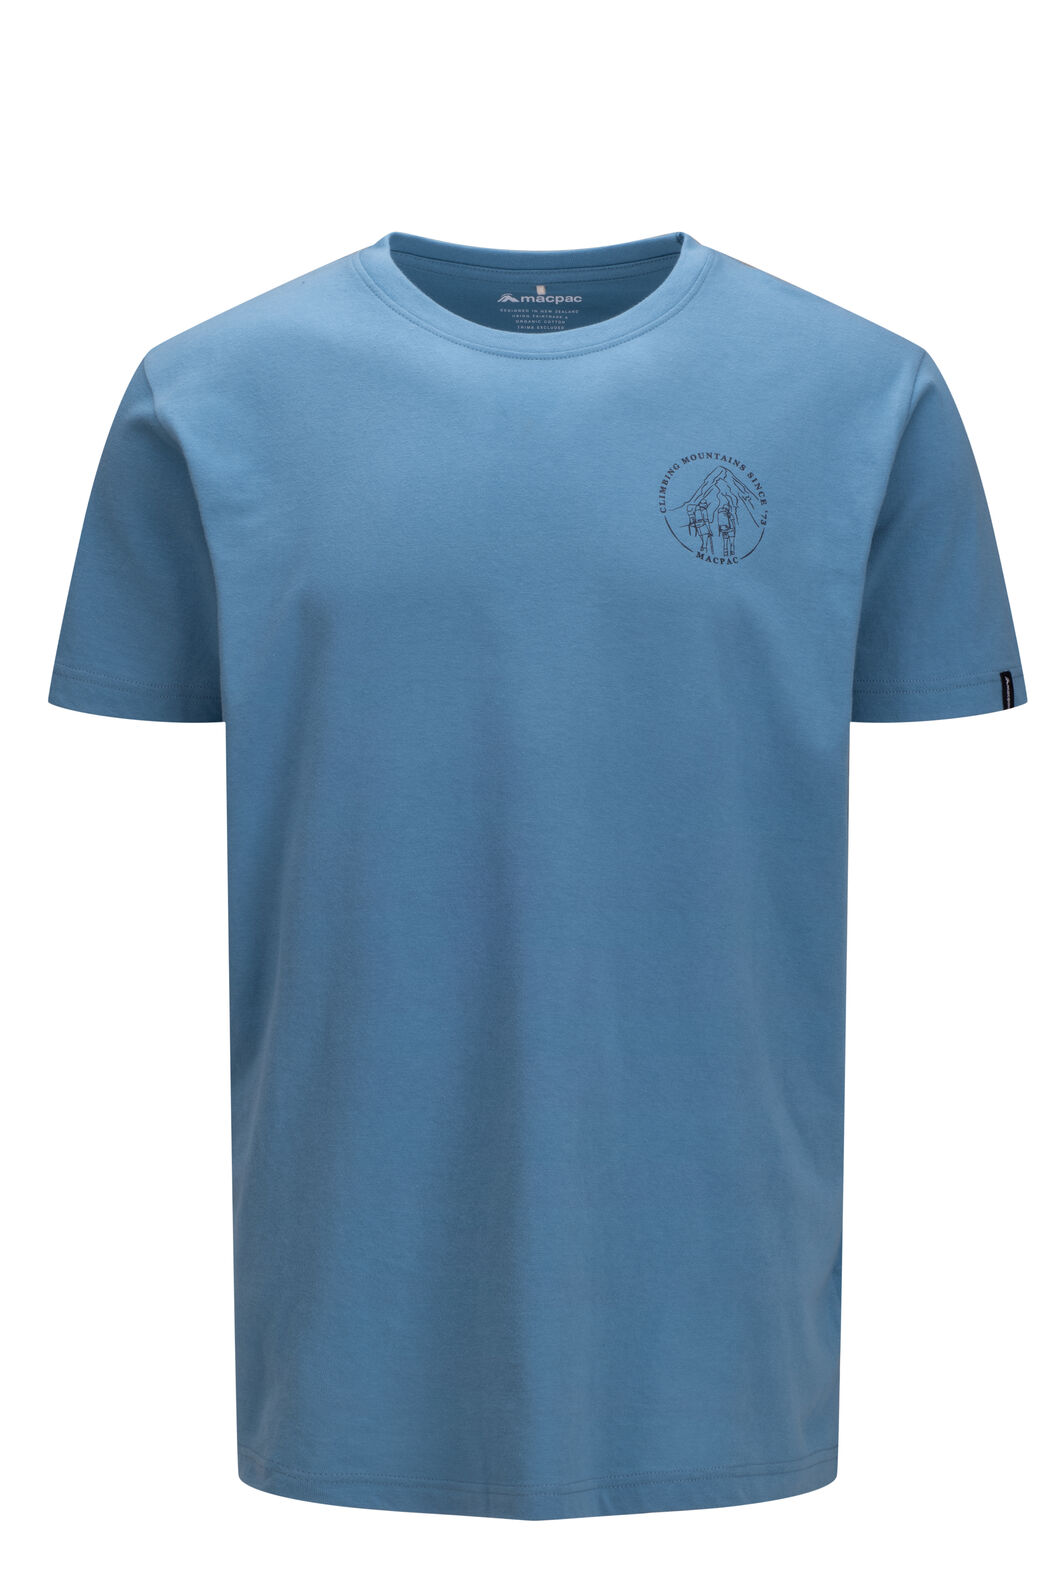 Macpac Men's Since 1973 T-Shirt | Macpac